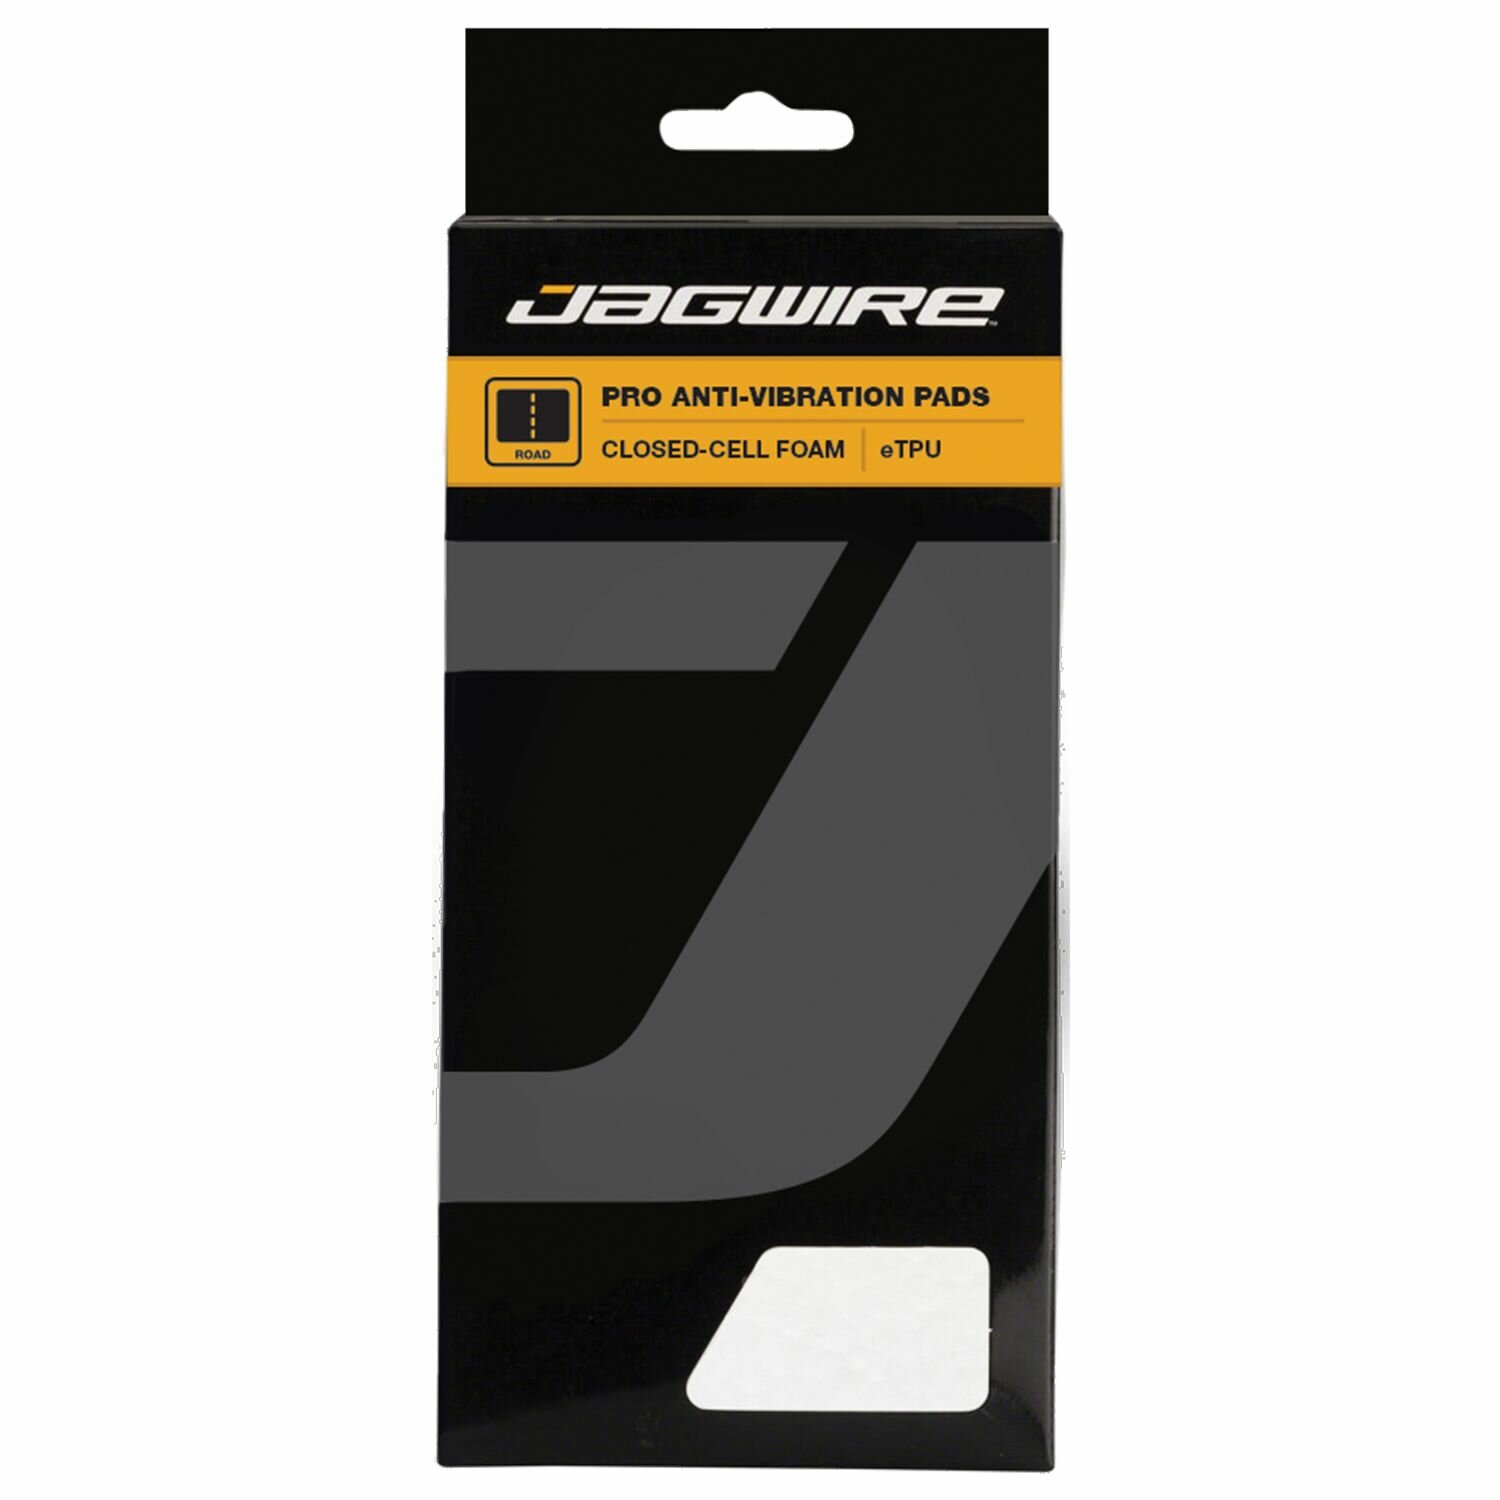 Накладки демпферные на руль Jagwire Pro Anti-Vibration Pads (BRA002)